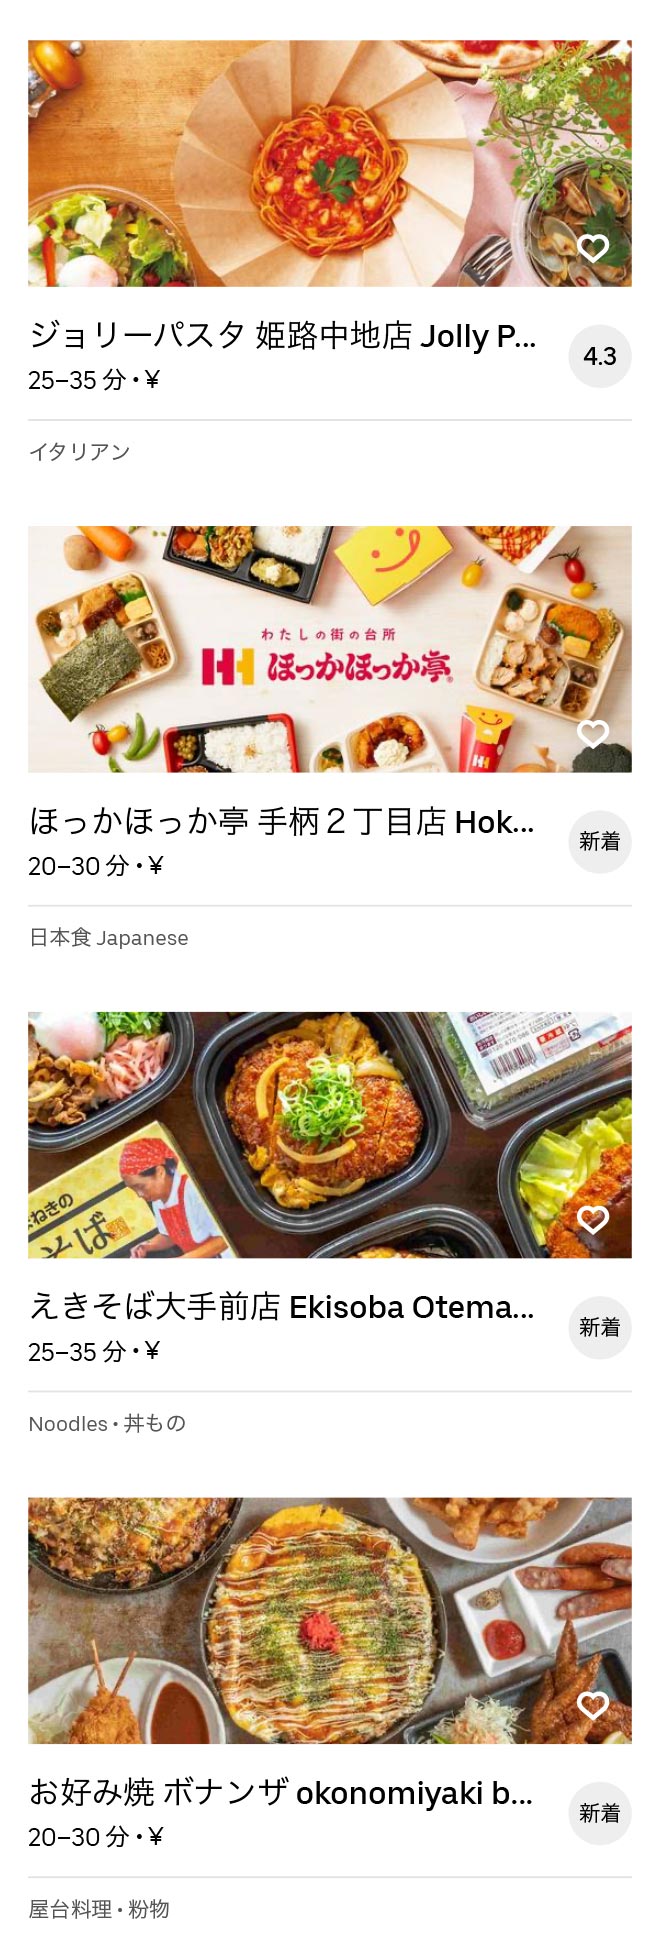 Himeji menu 2007 04